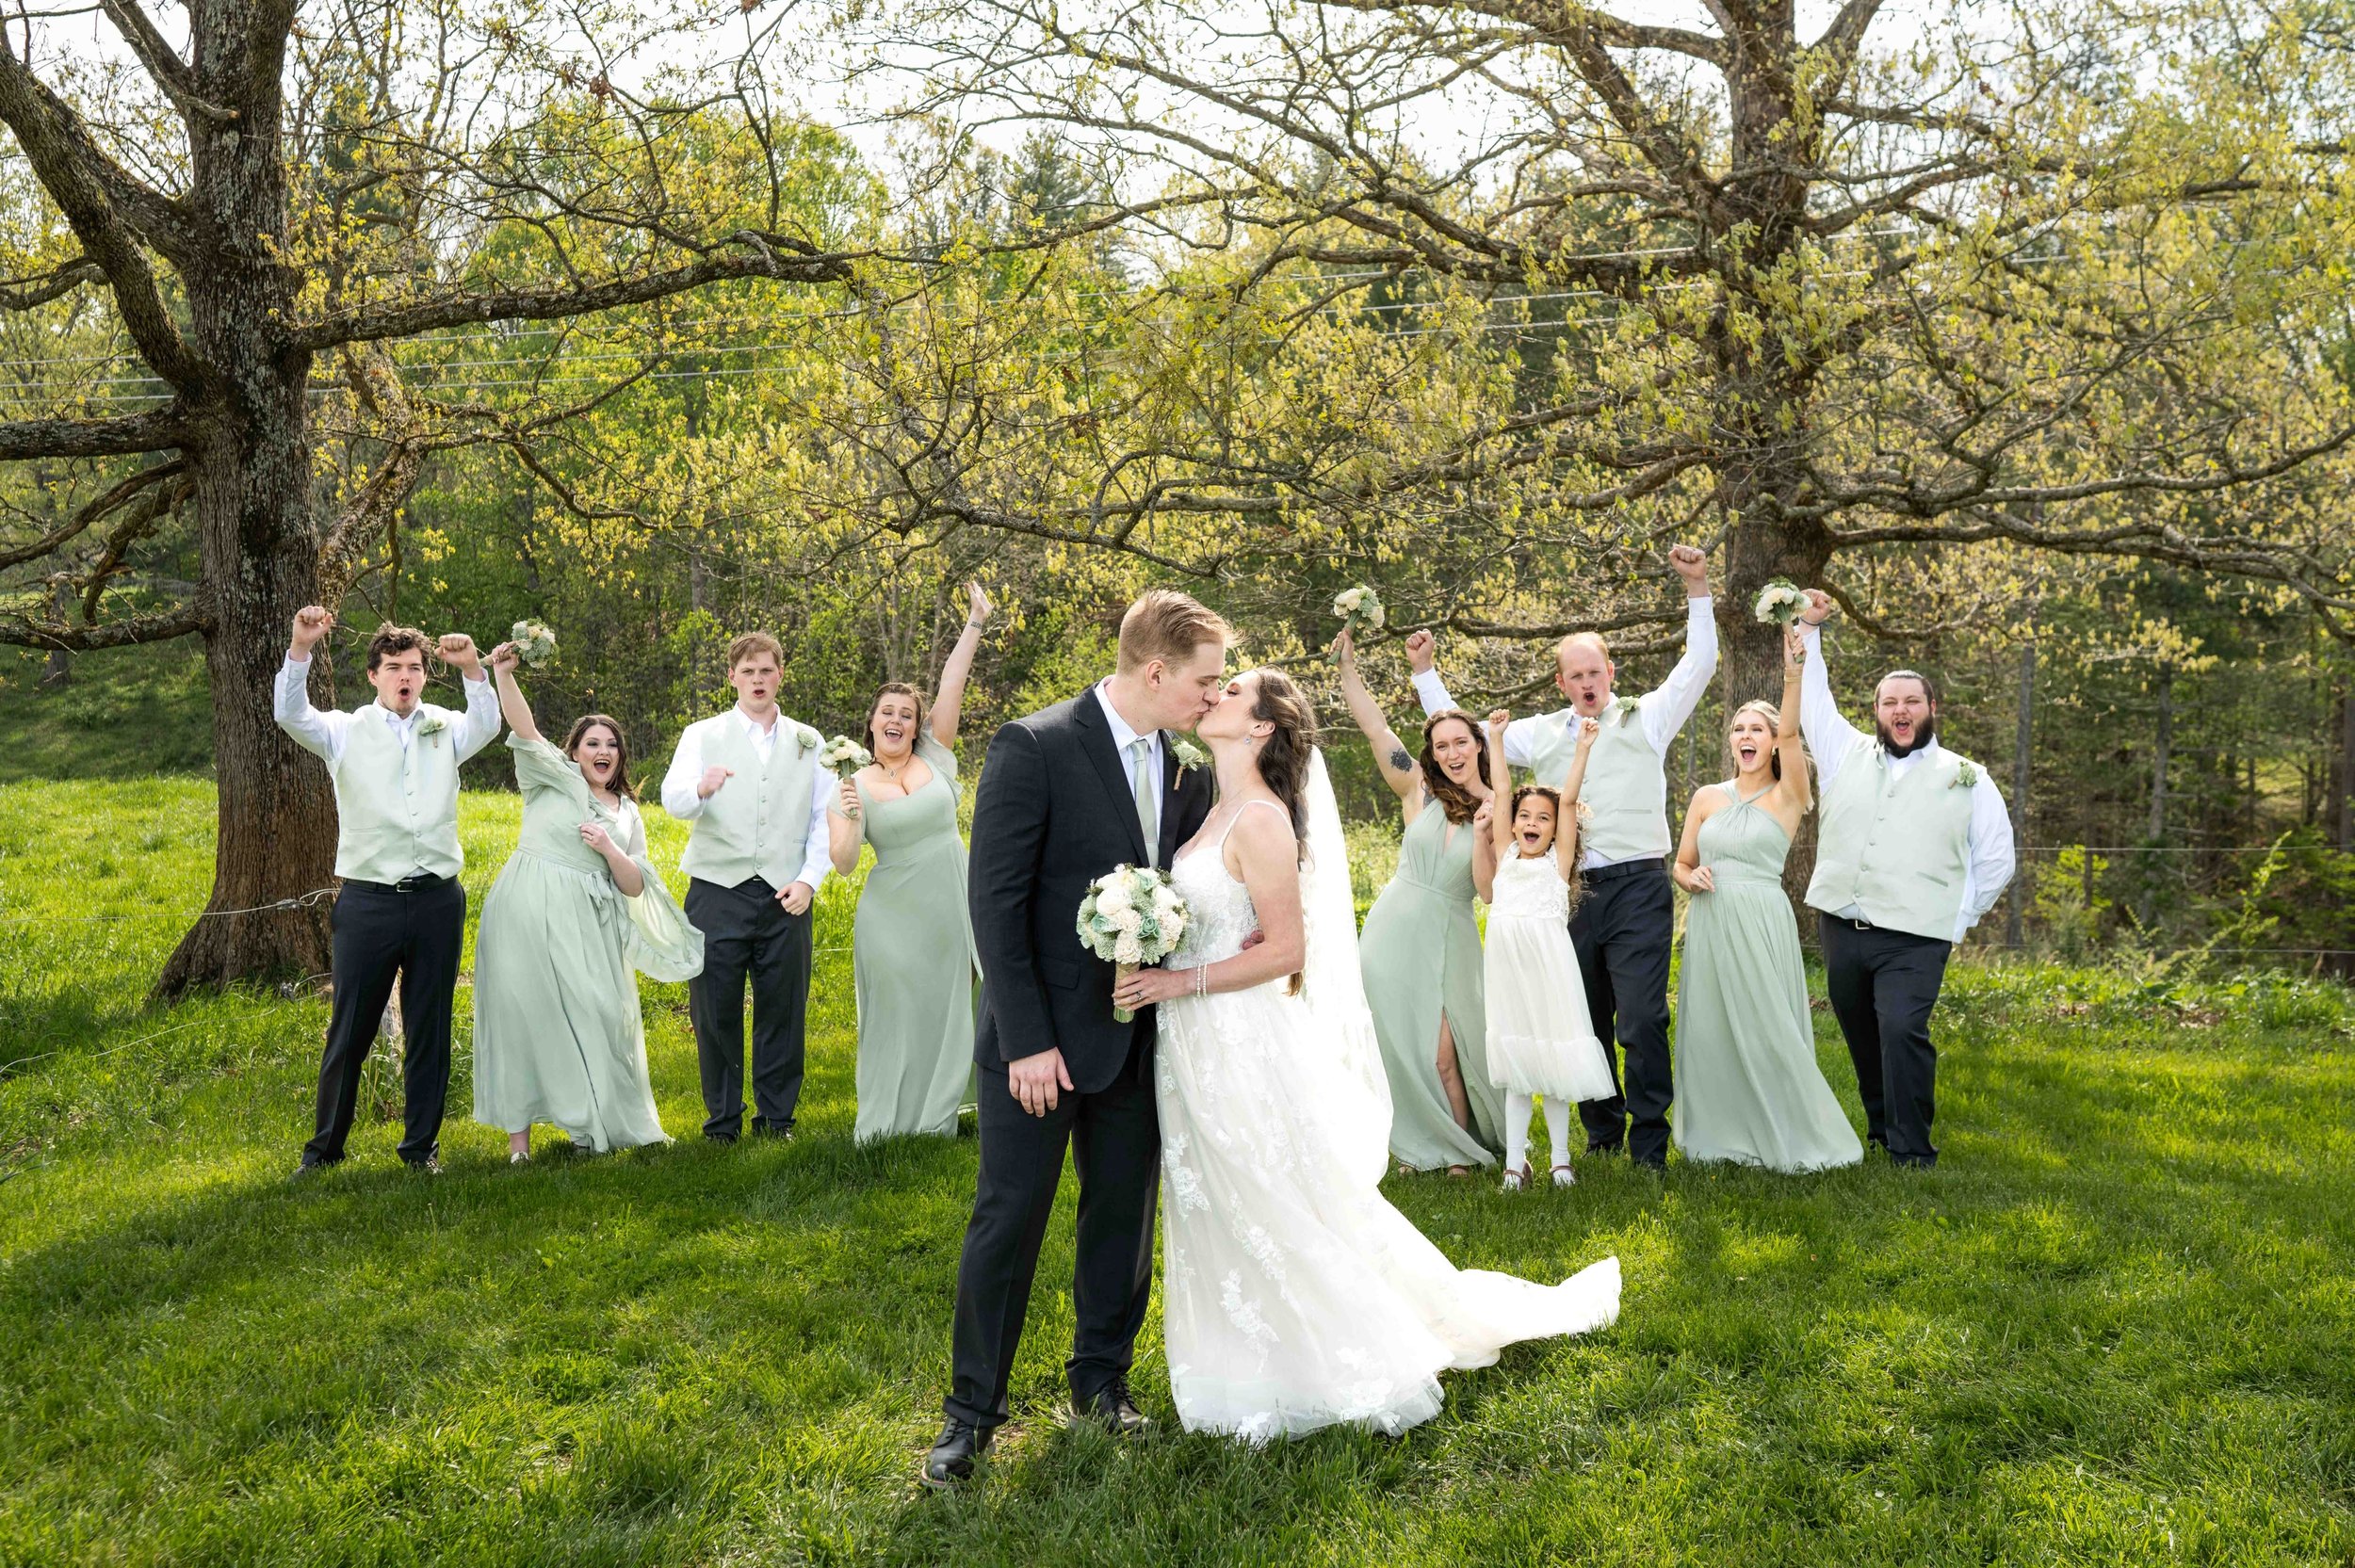 Outdoor April Wedding in Asheville North Carolina at Emerald Ridge Farm & Event Center blog 2 13.jpg